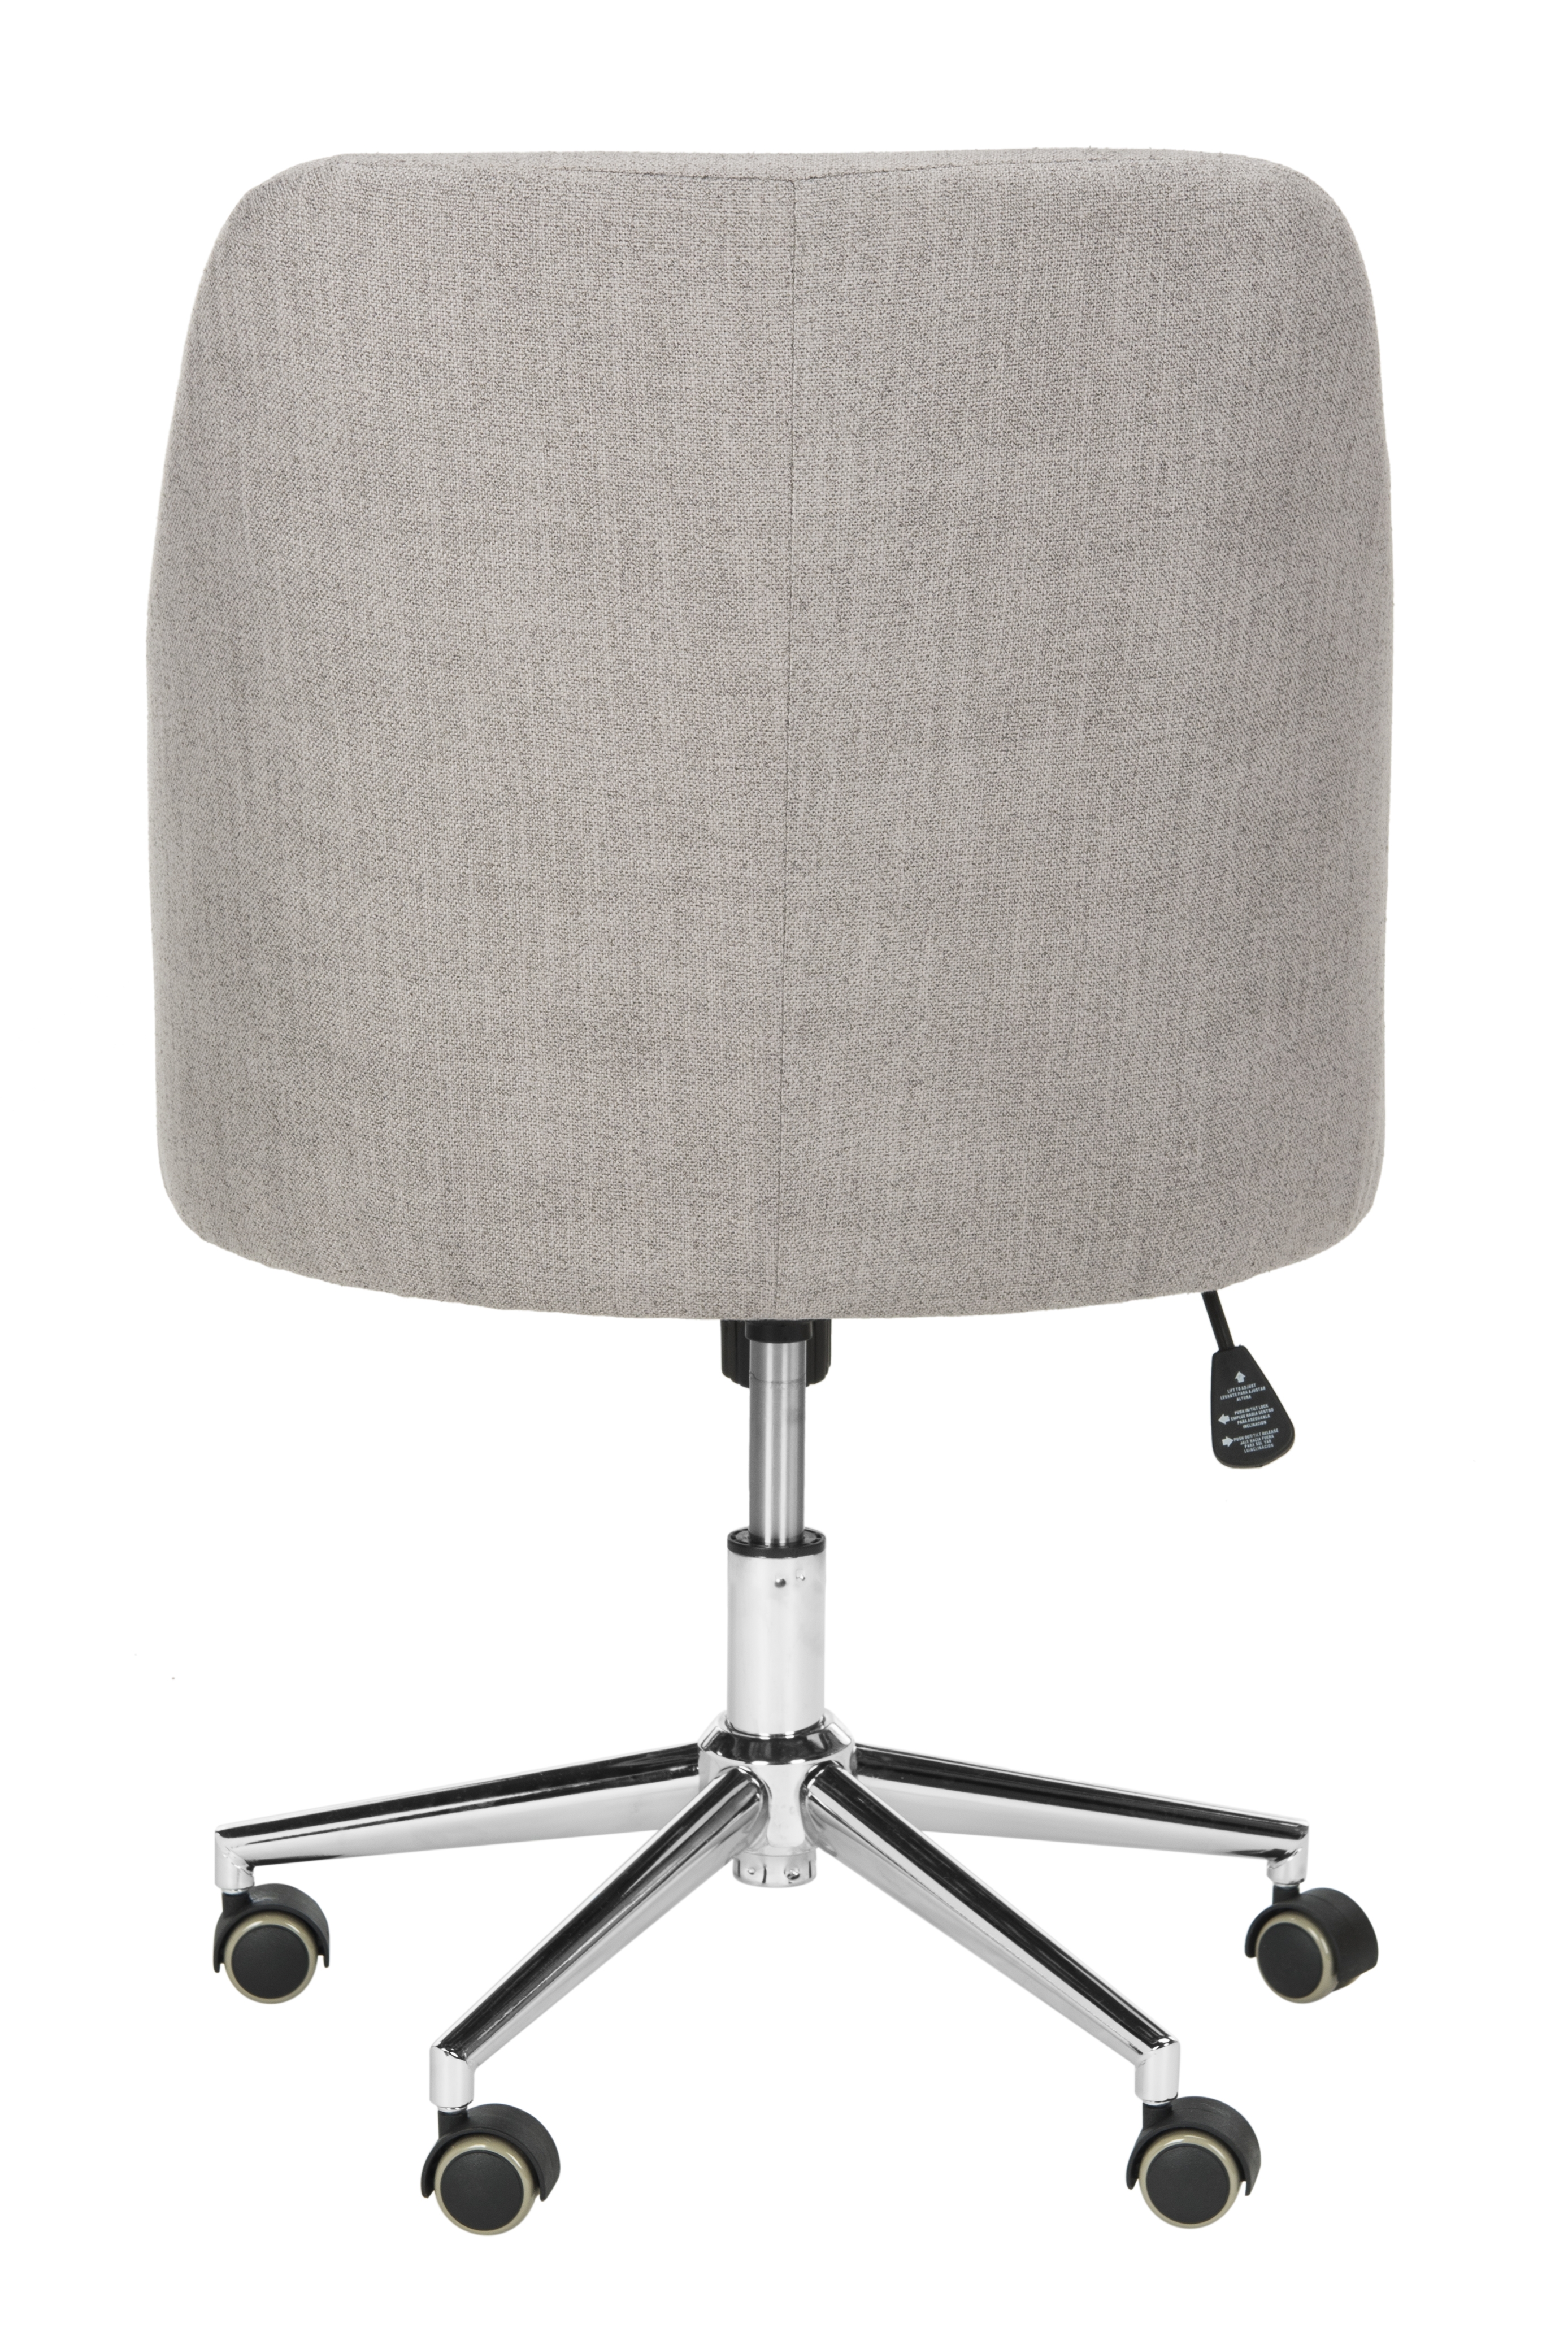 Adrienne Linen Chrome Leg Swivel Office Chair - Grey/Chrome - Safavieh - Image 2